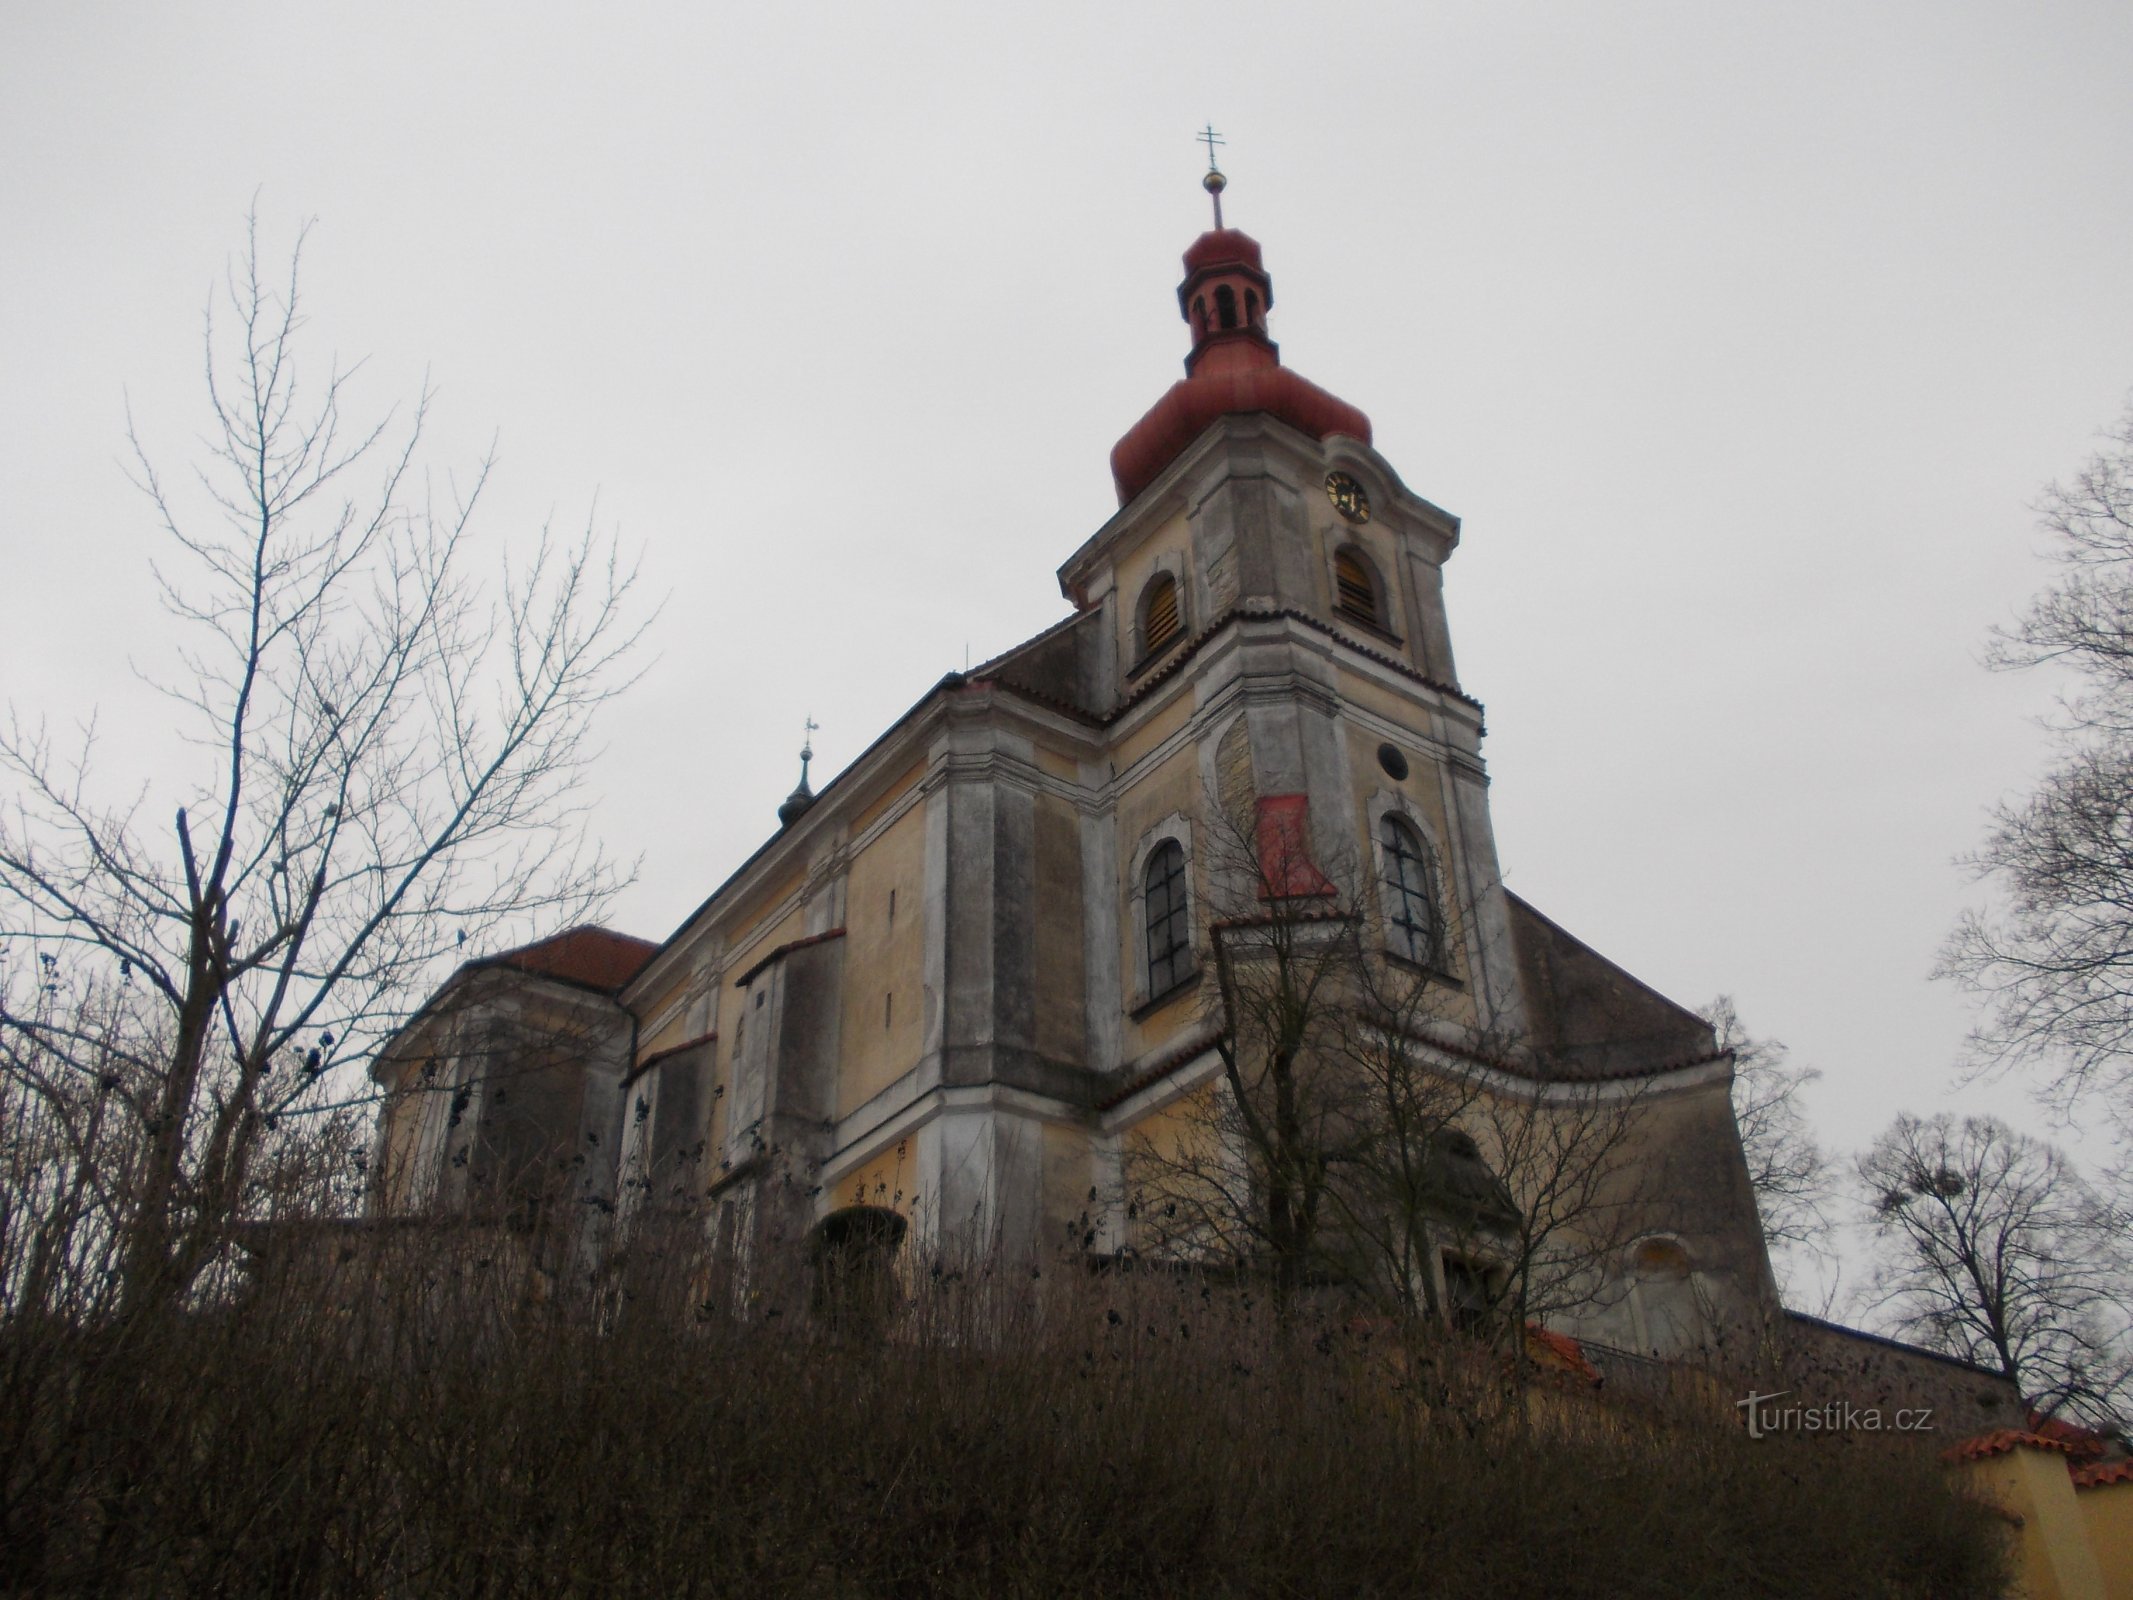 cerkiew na wzgórzu we wsi Běstvina